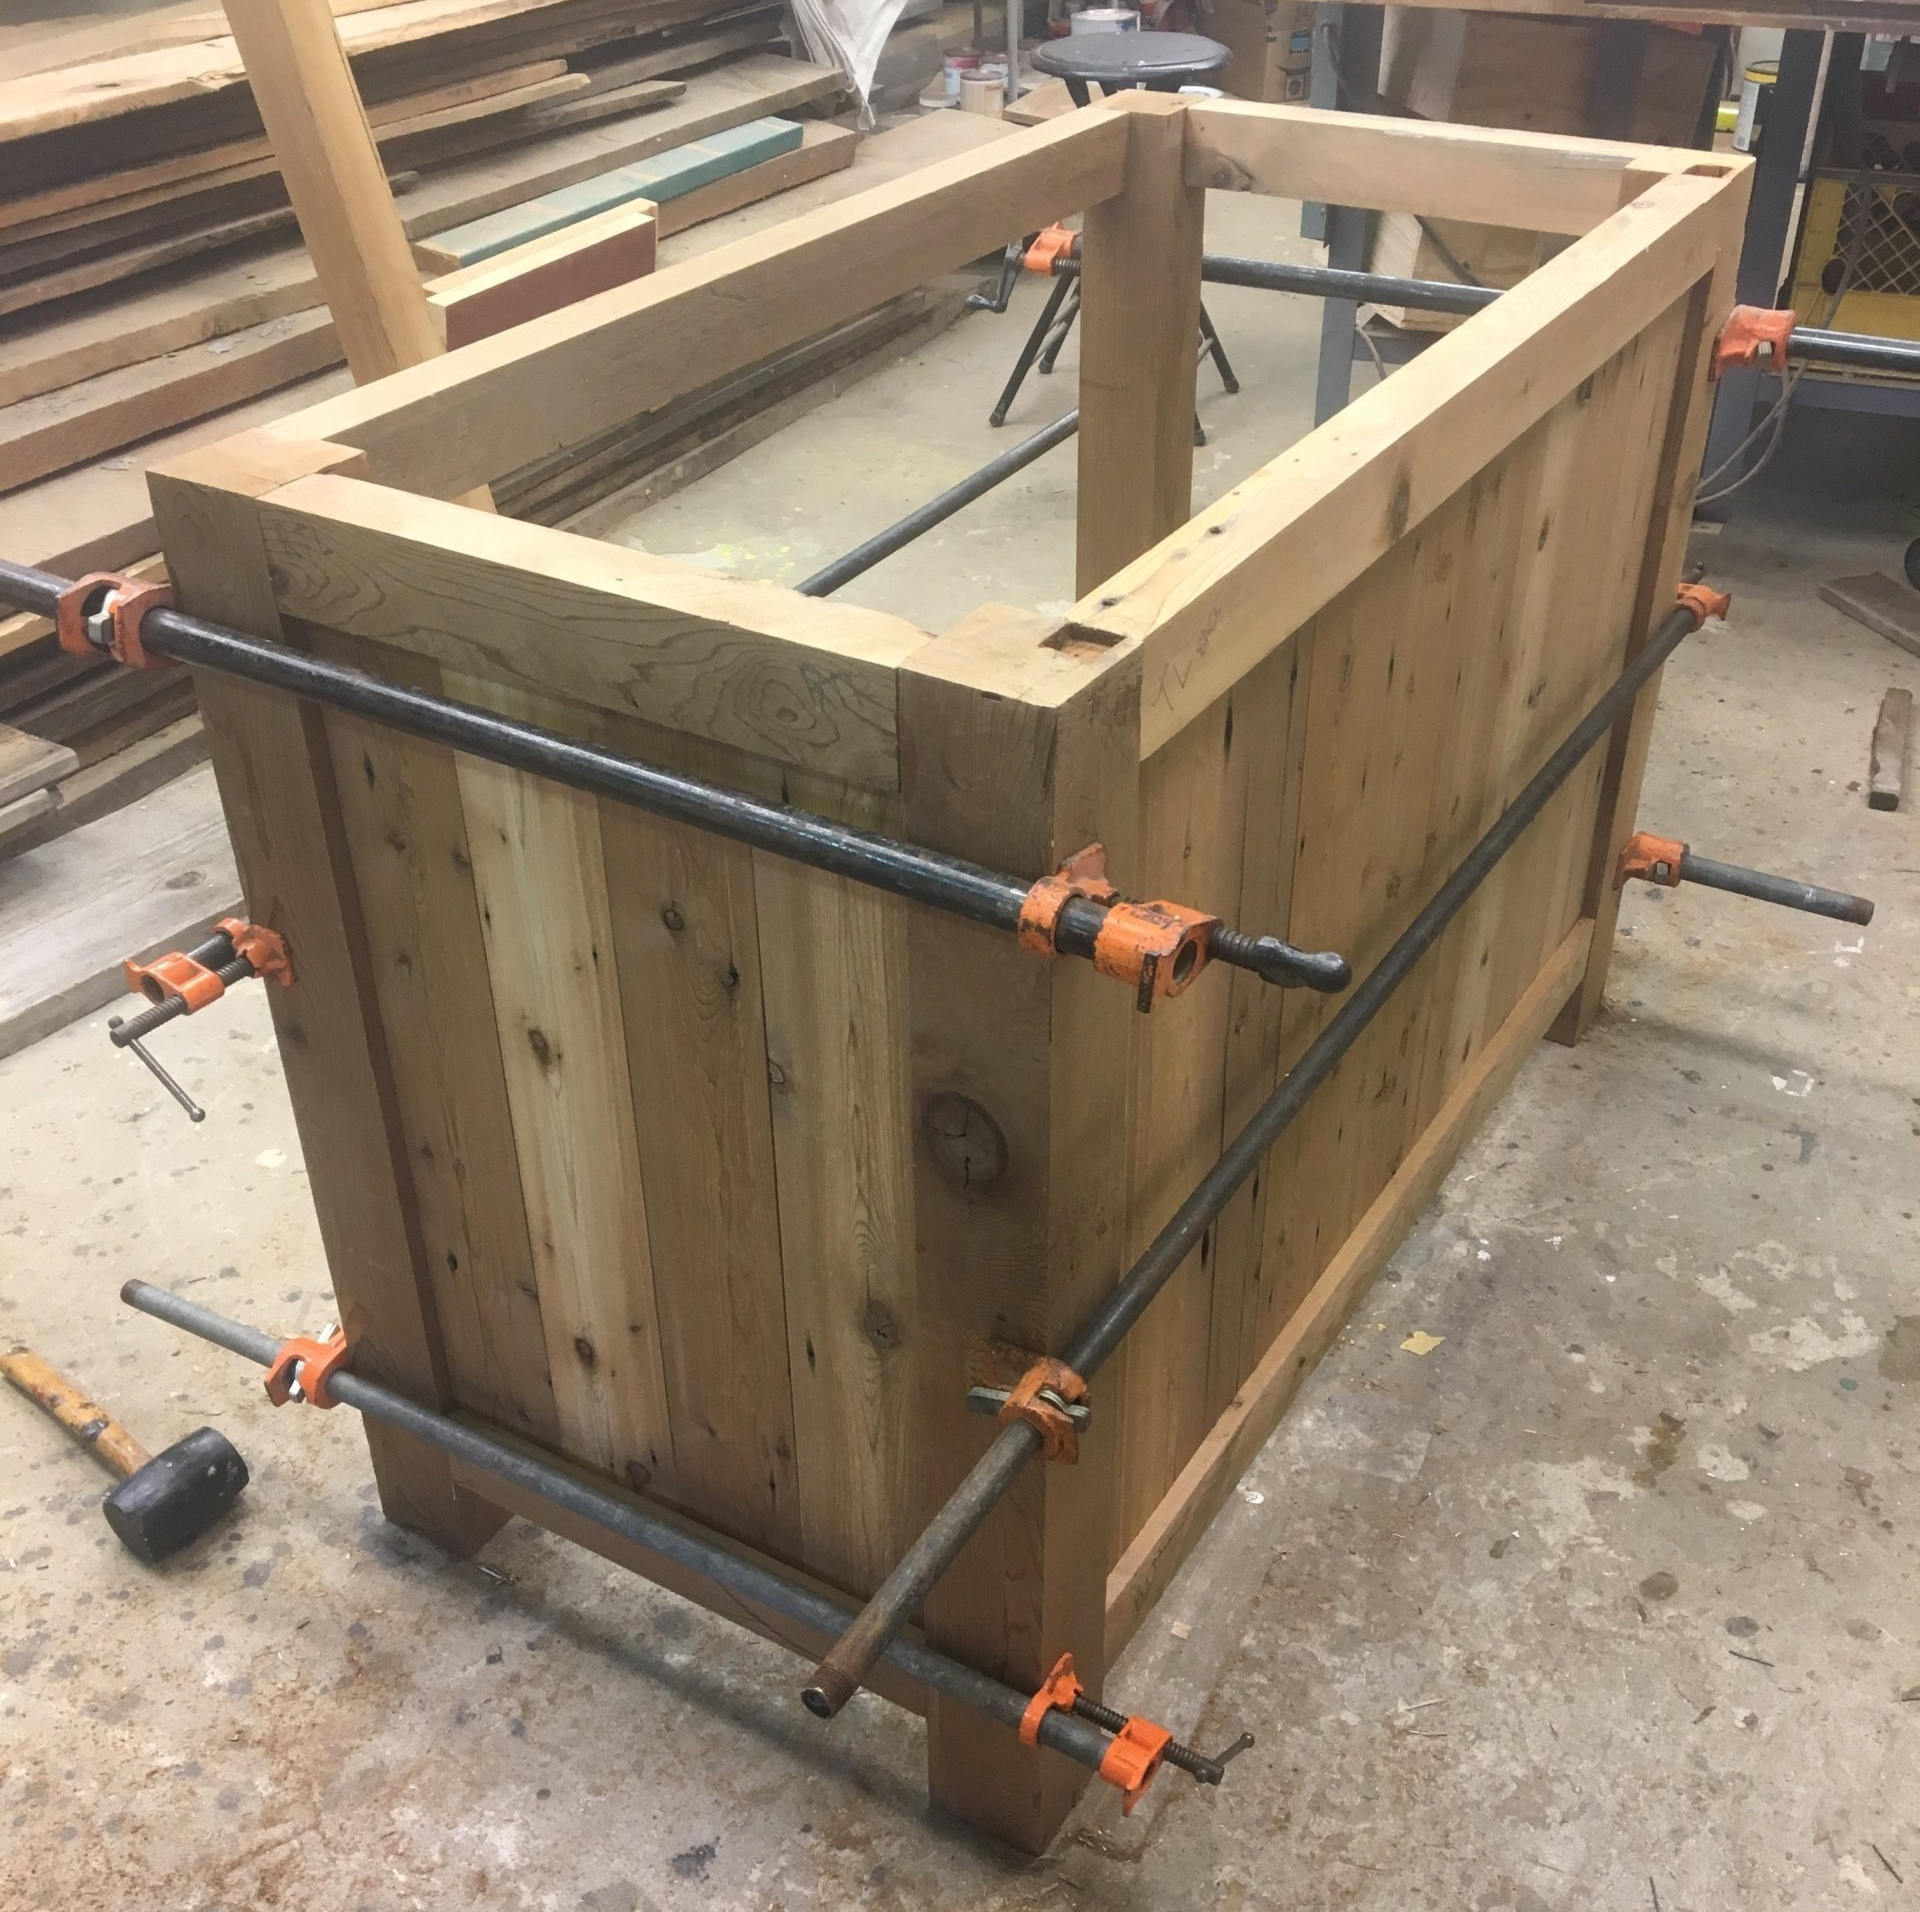 Cedar cabinet frame under construction.